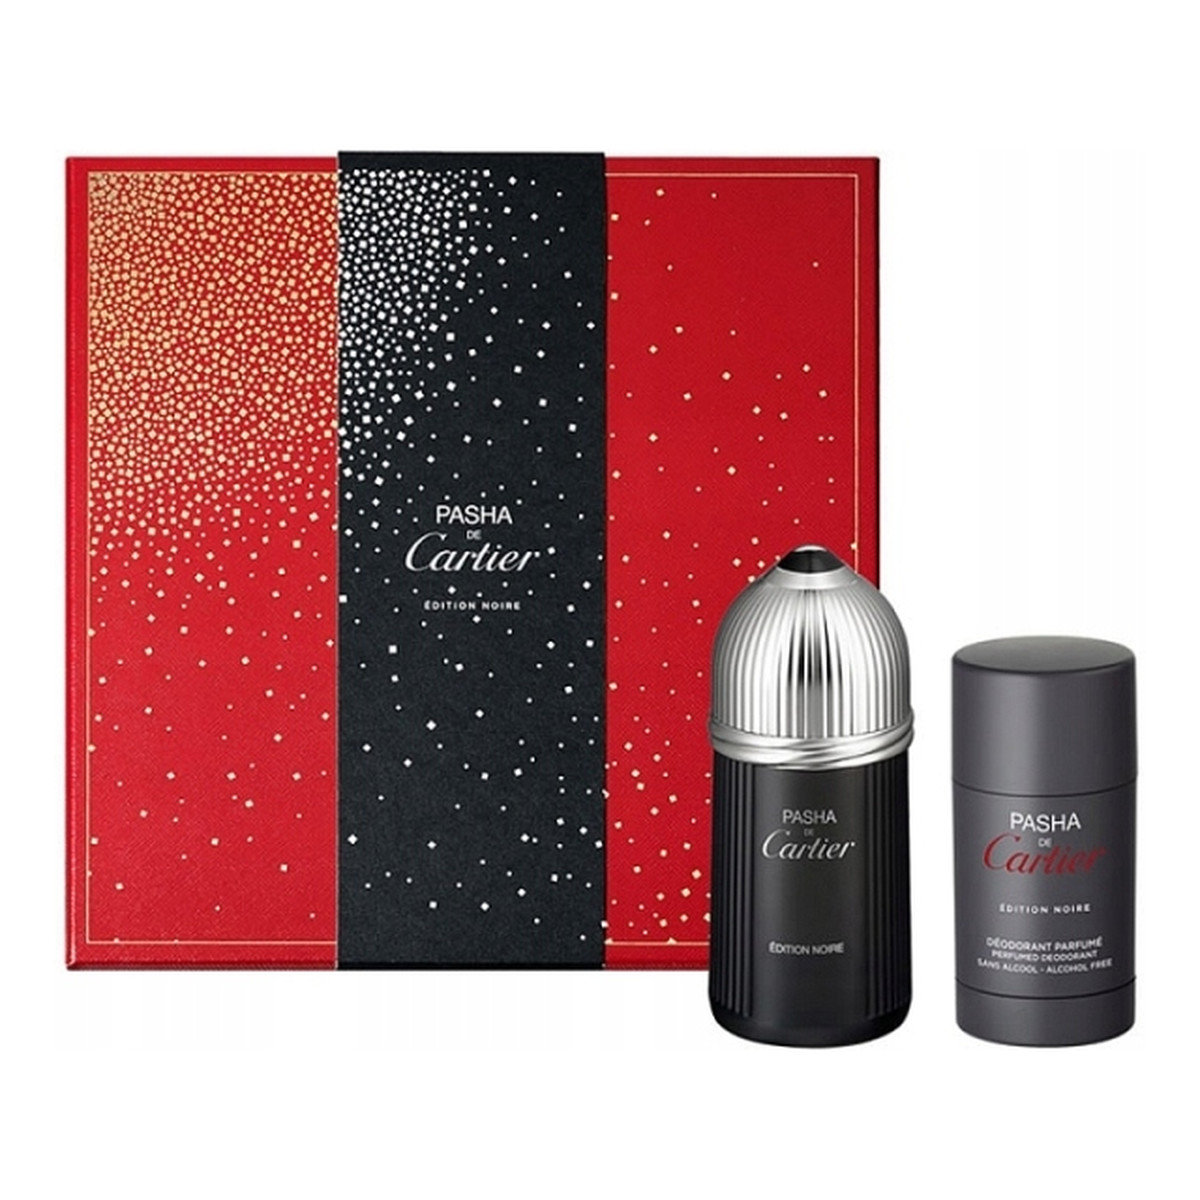 Cartier Pasha Edition Noire zestaw (woda toaletowa 100ml + dezodorant sztyft 75ml)